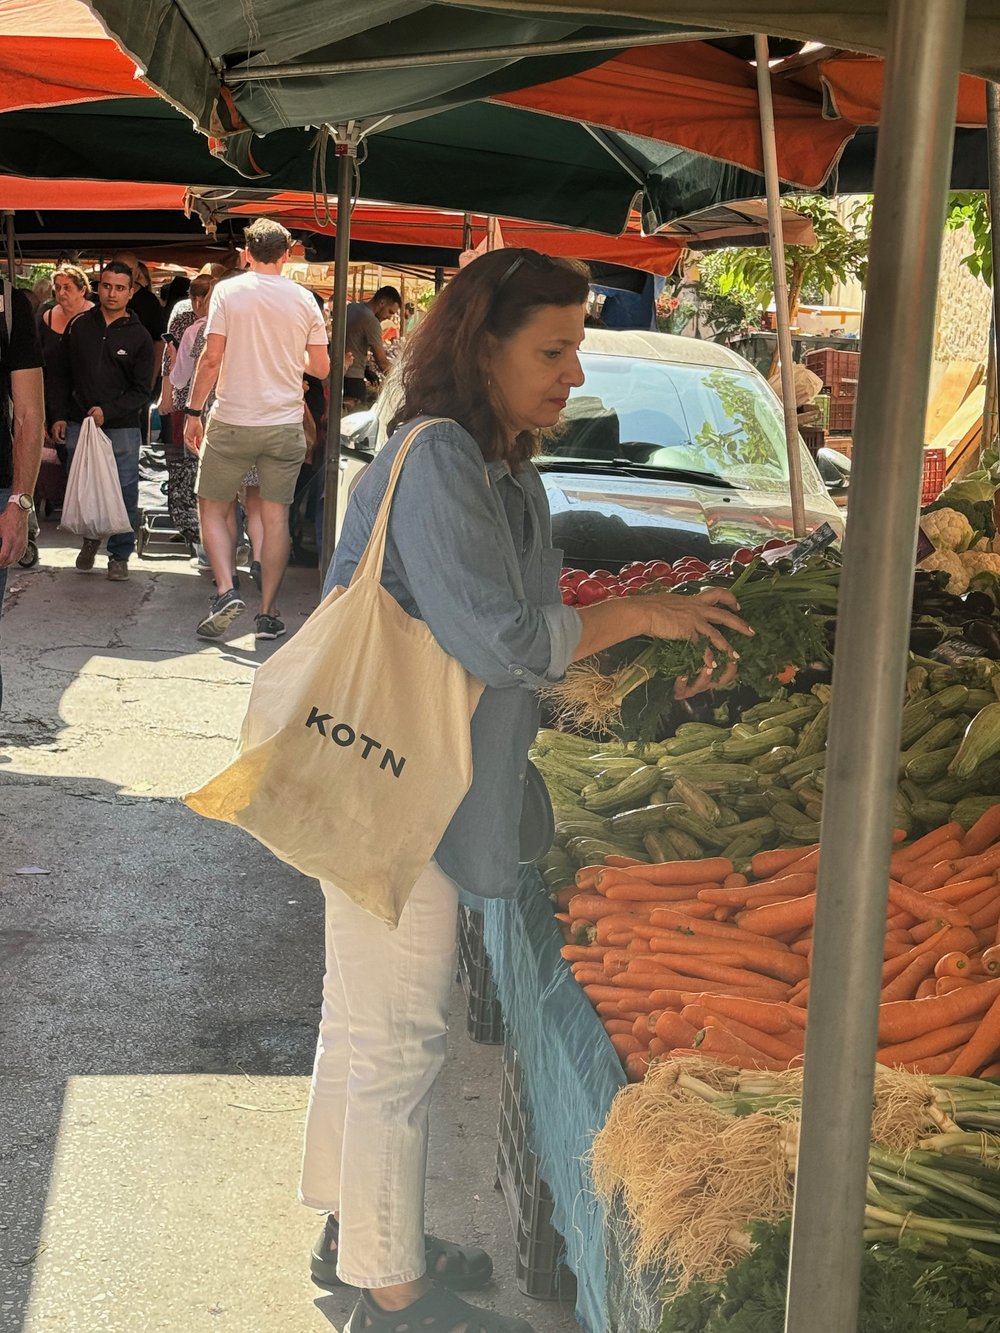 Diane + Athens farmers market = yum